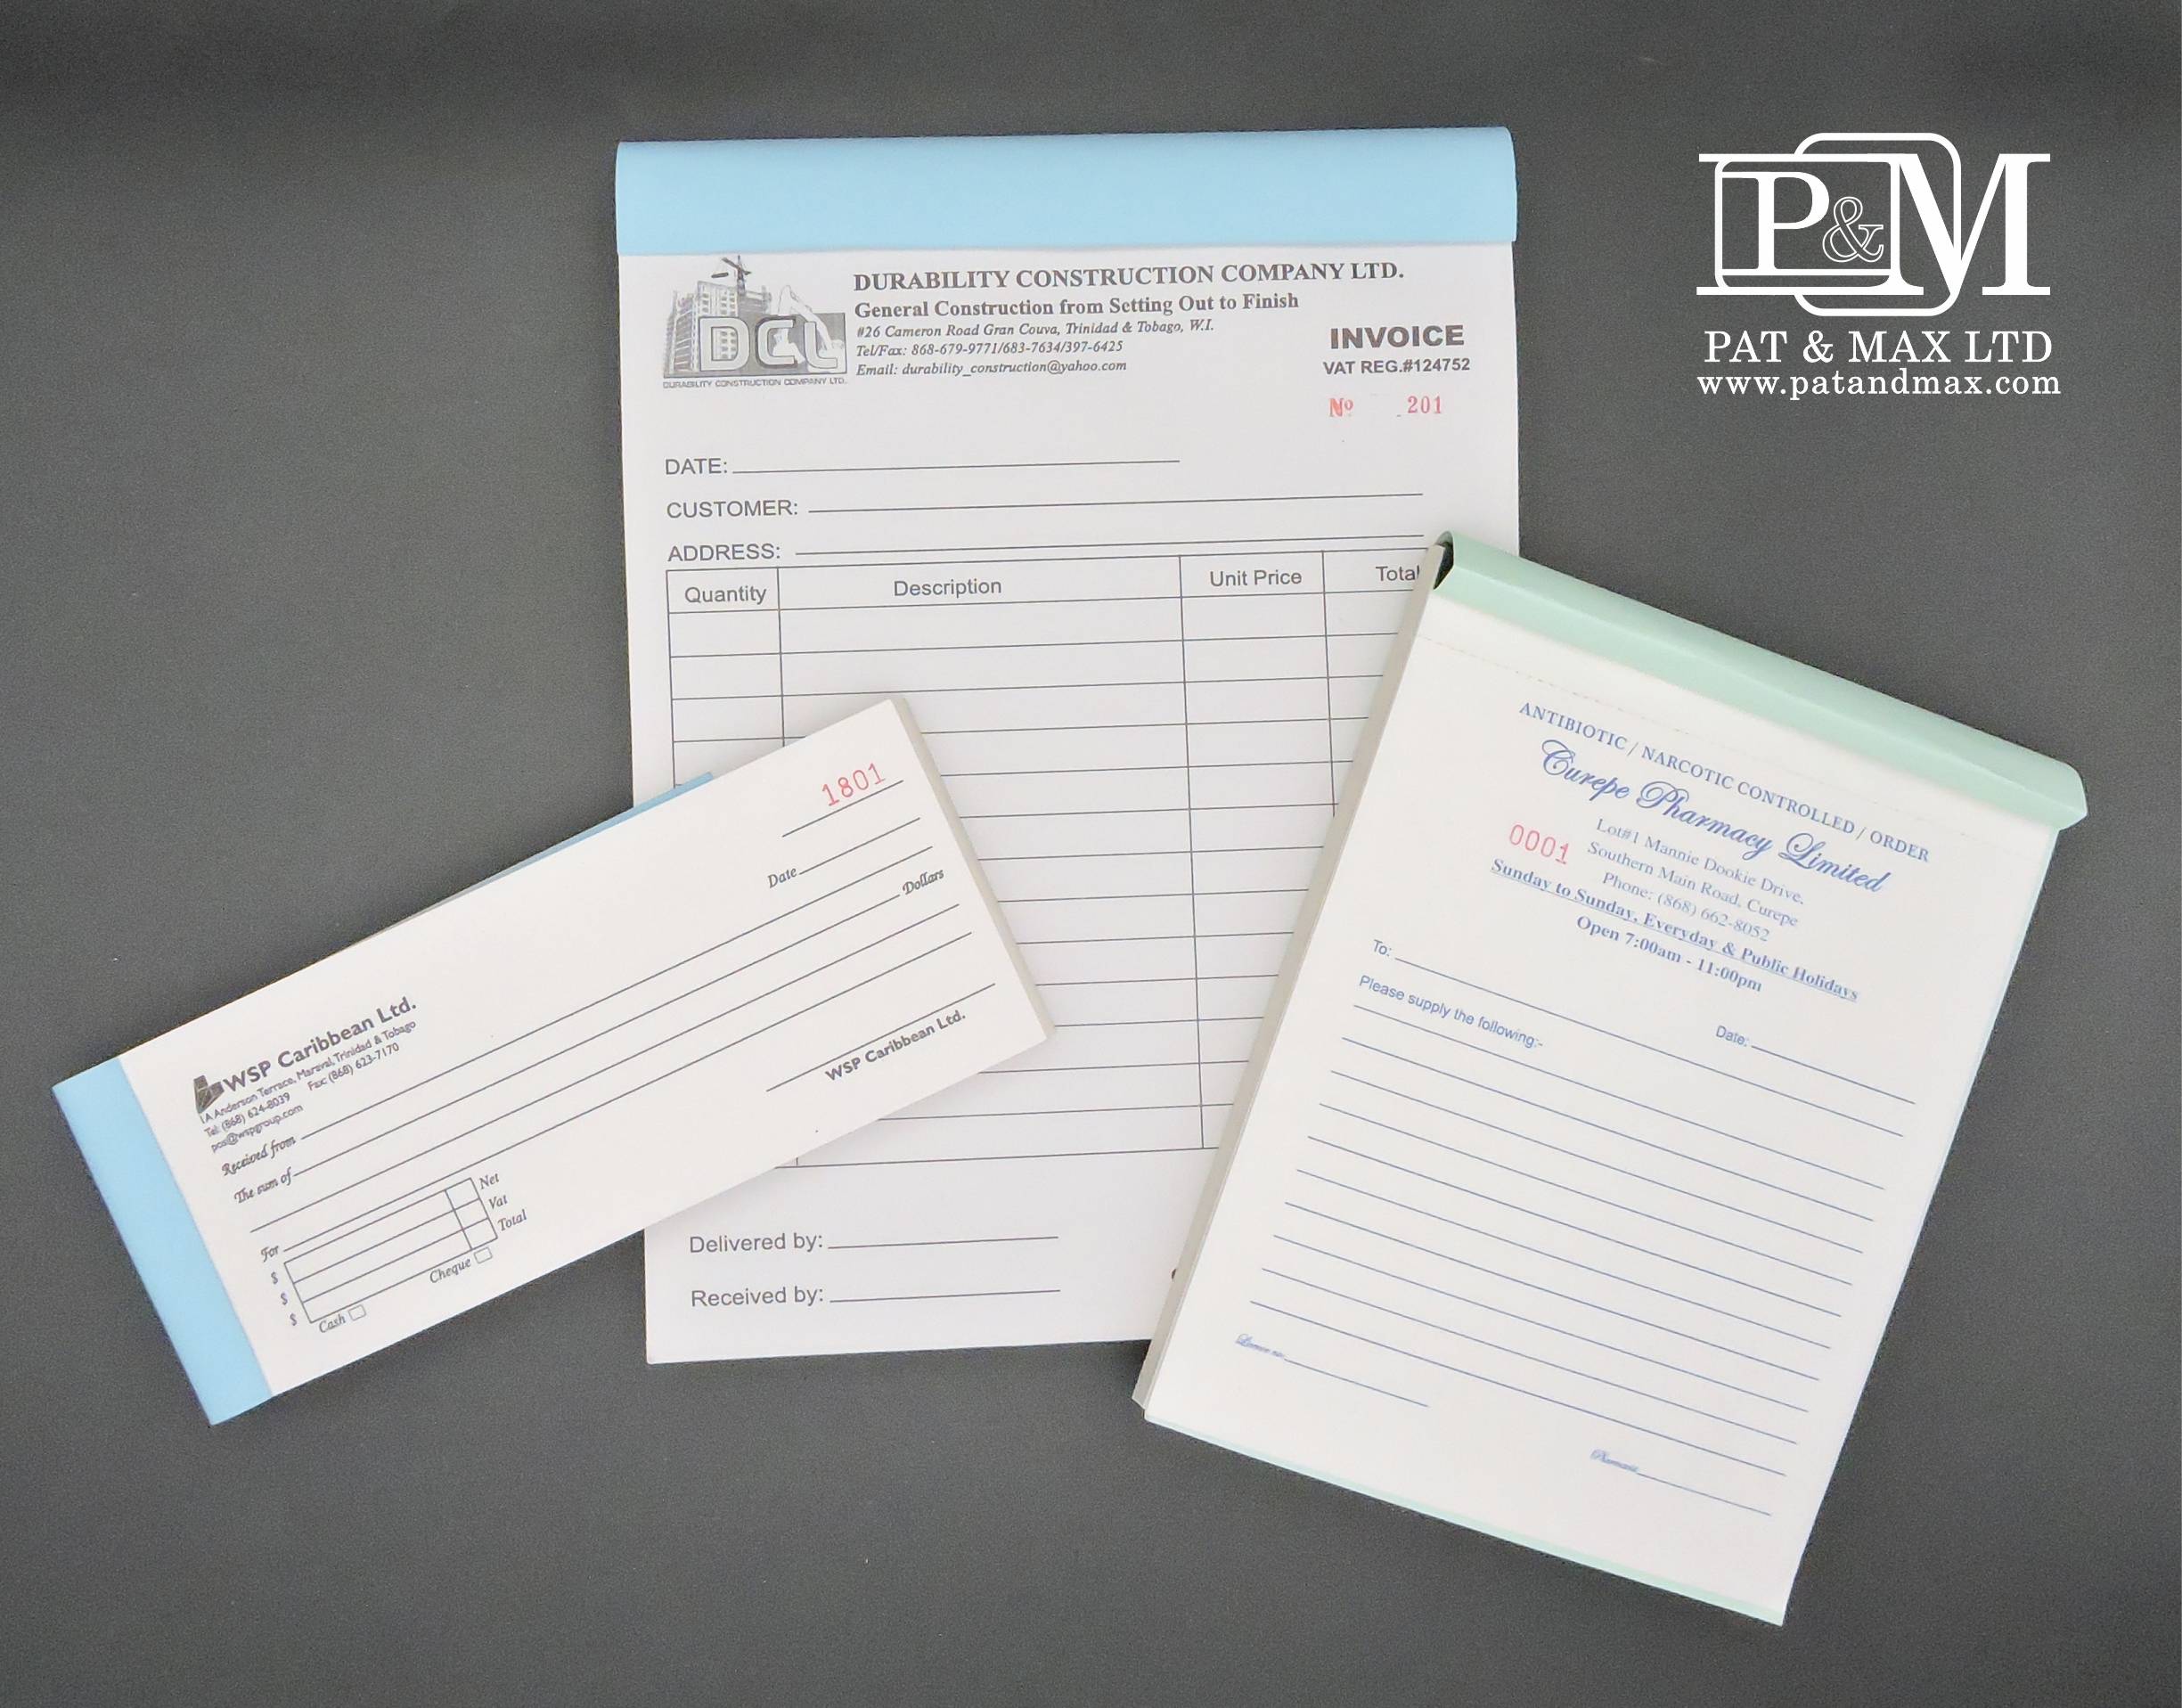 Pat & Max Ltd Plastic & ID Card Systems - IDENTIFICATION CARDS